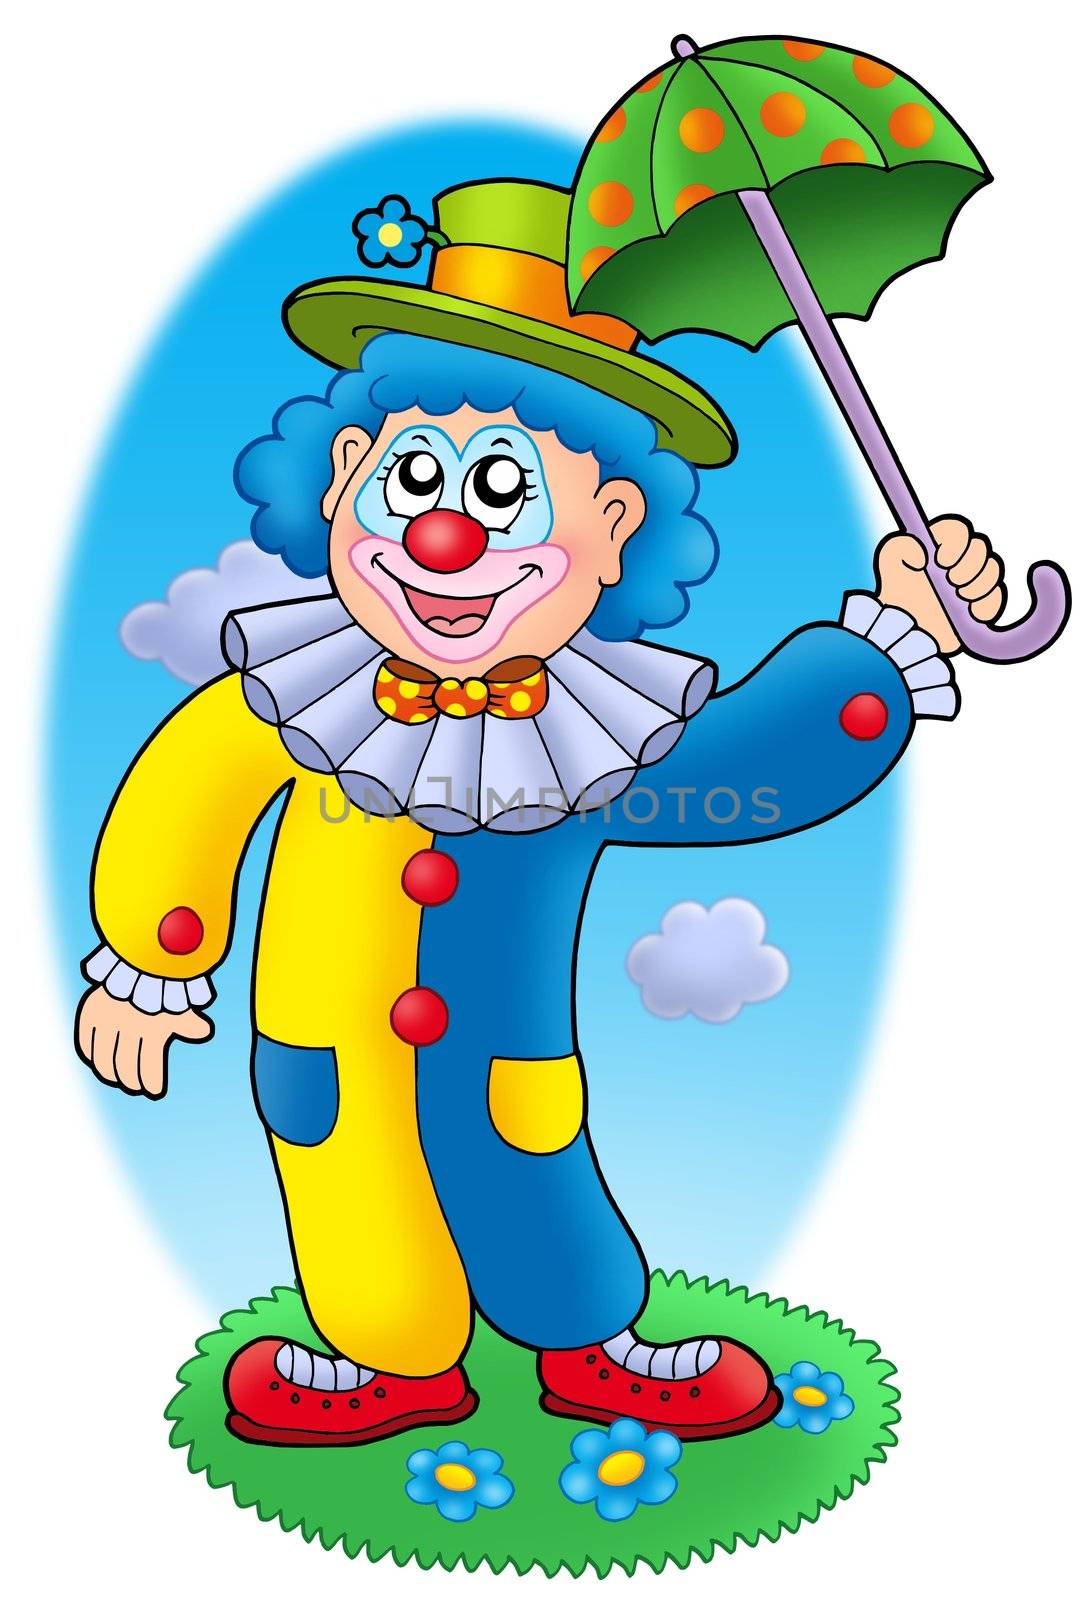 Cartoon clown holding umbrella by clairev